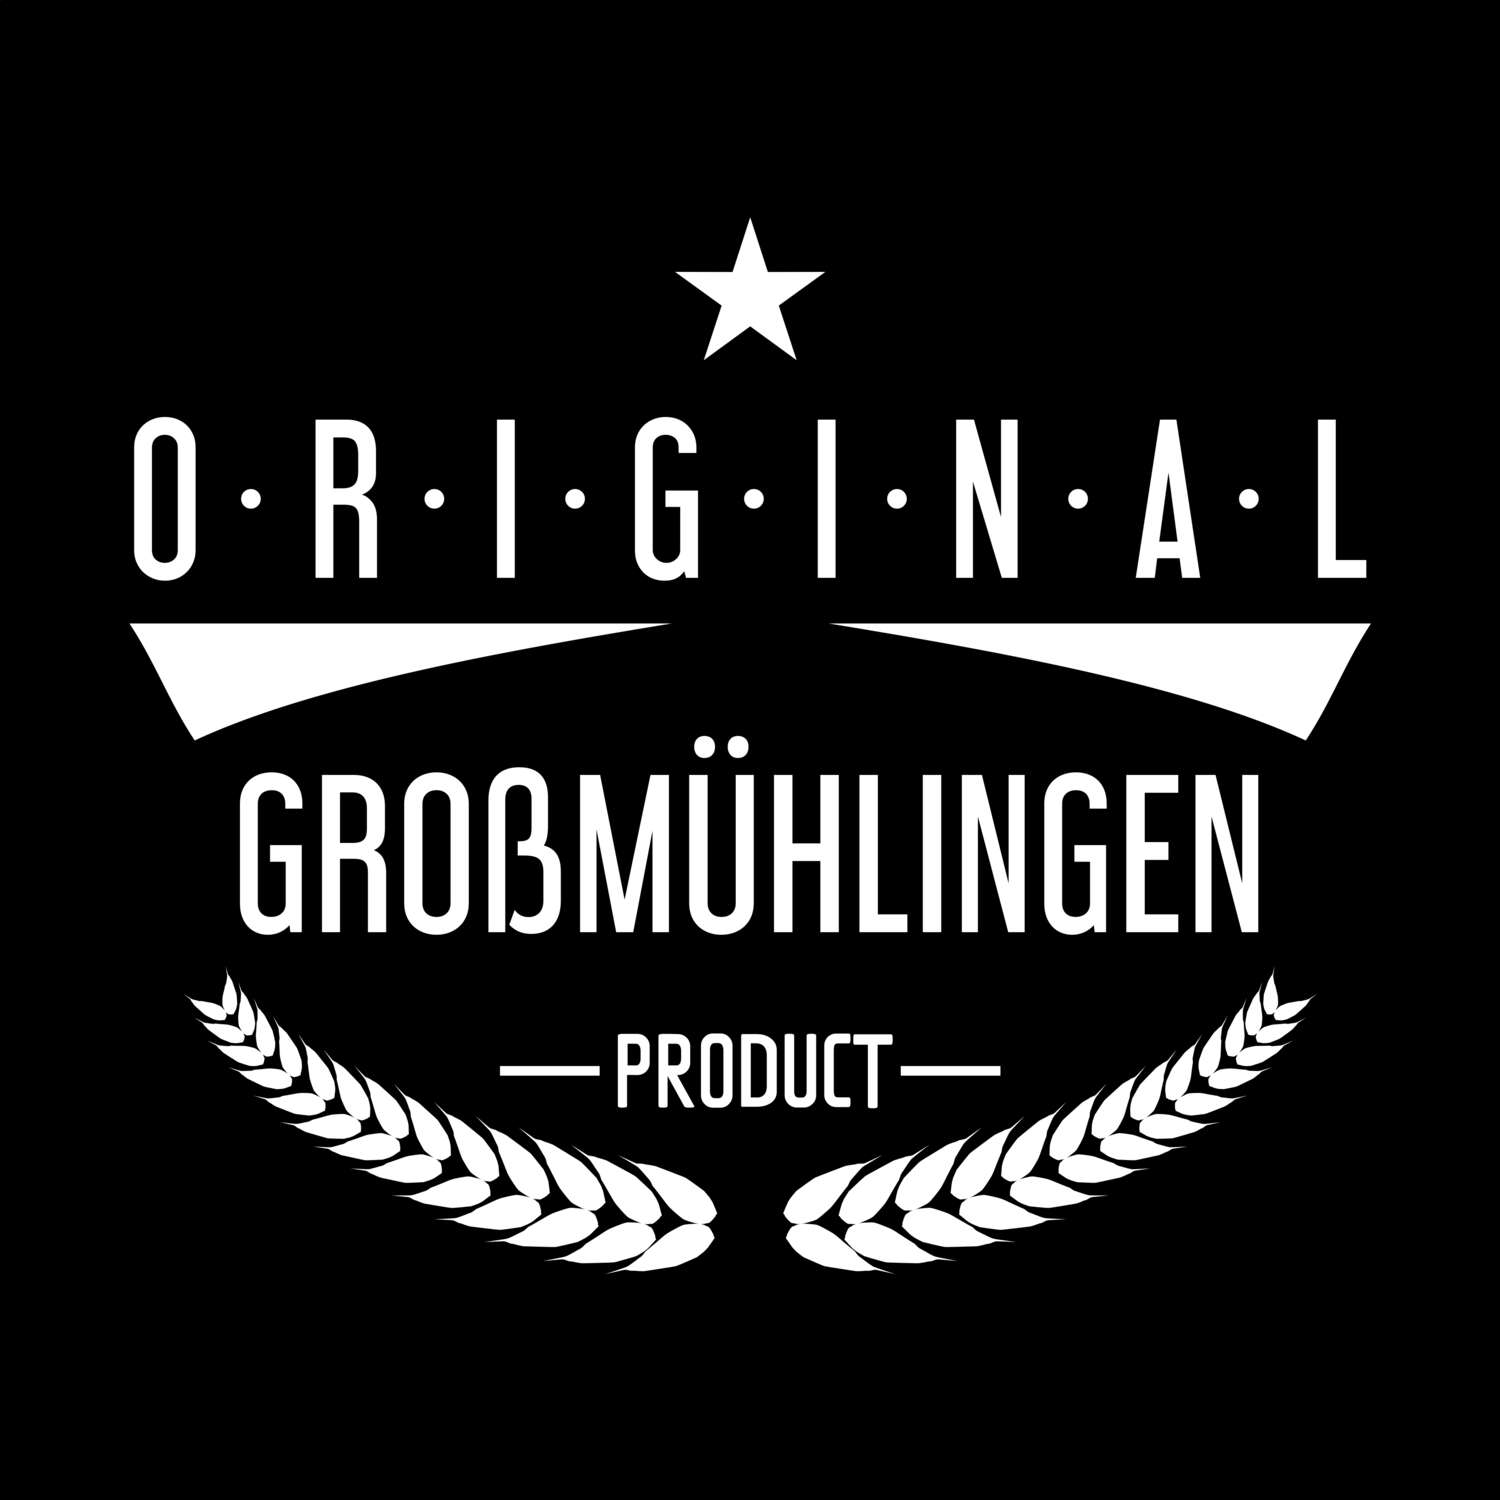 Großmühlingen T-Shirt »Original Product«